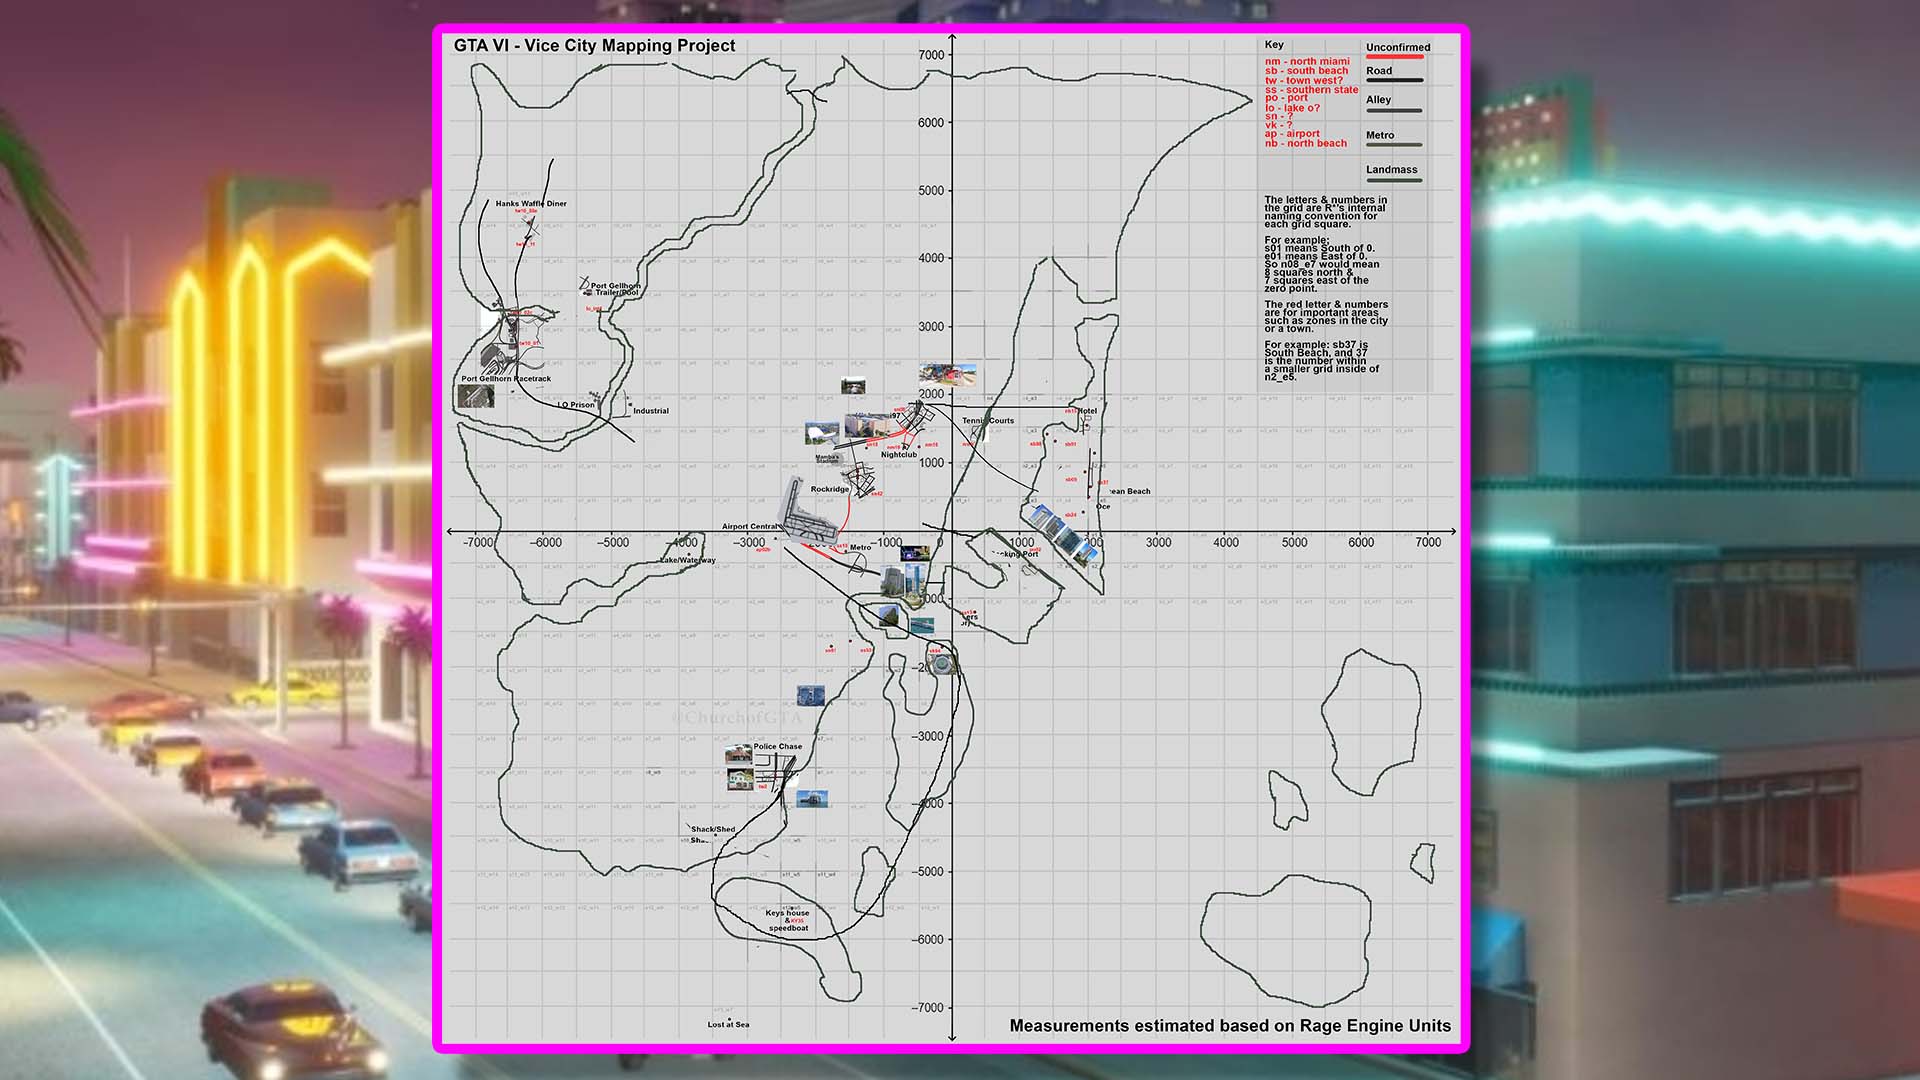 The latest version of one community map as of 9/21/2022.  (Image: Church of GTA / Rockstar / Kotaku)